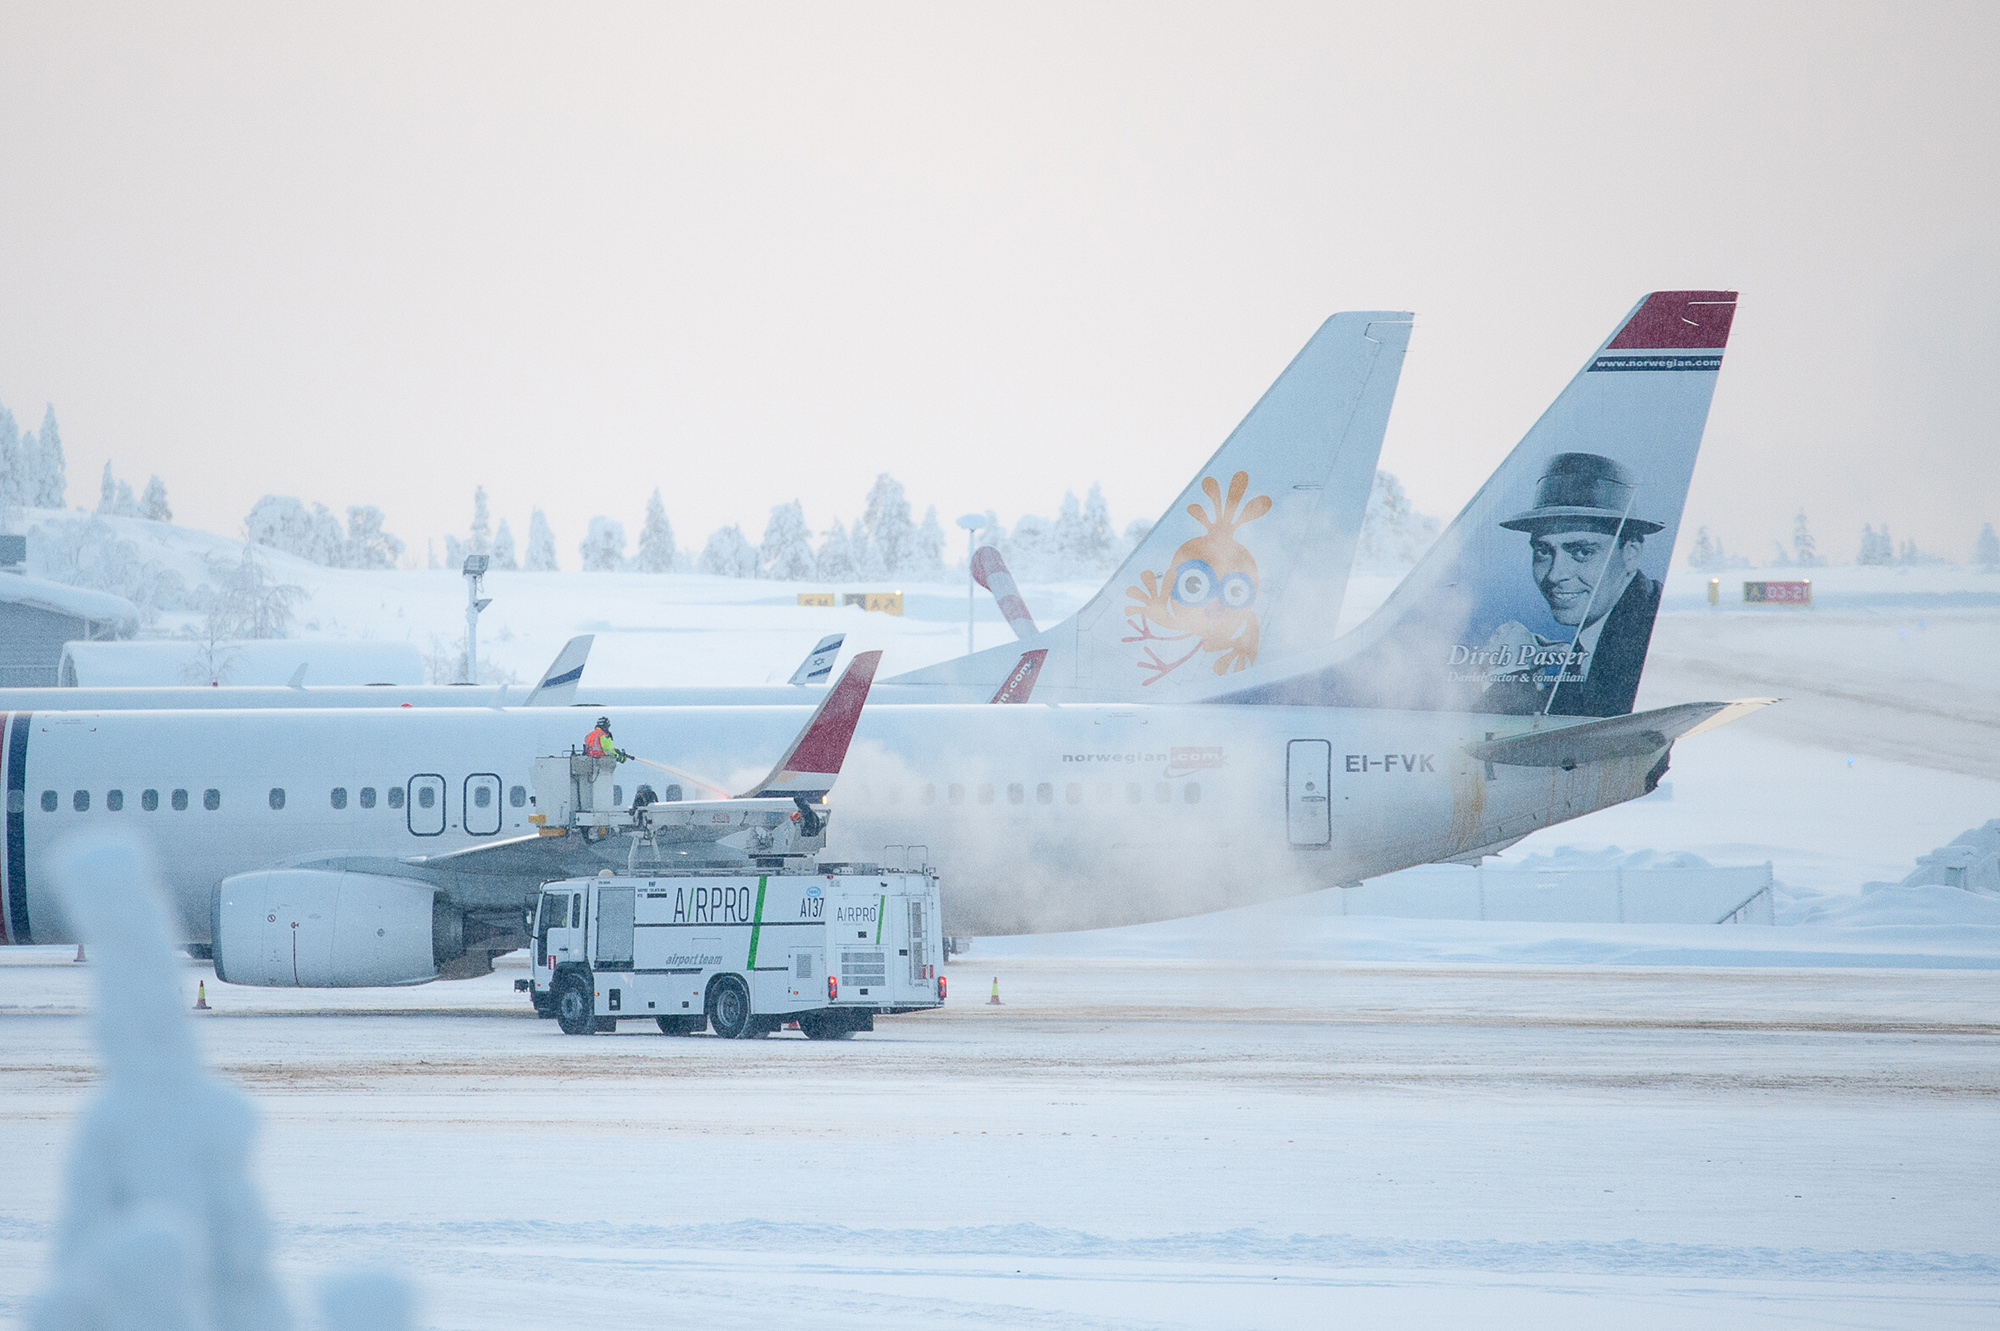 De-icing of planes is essential during winter weather. Photo Heikki Juntti (FMI)